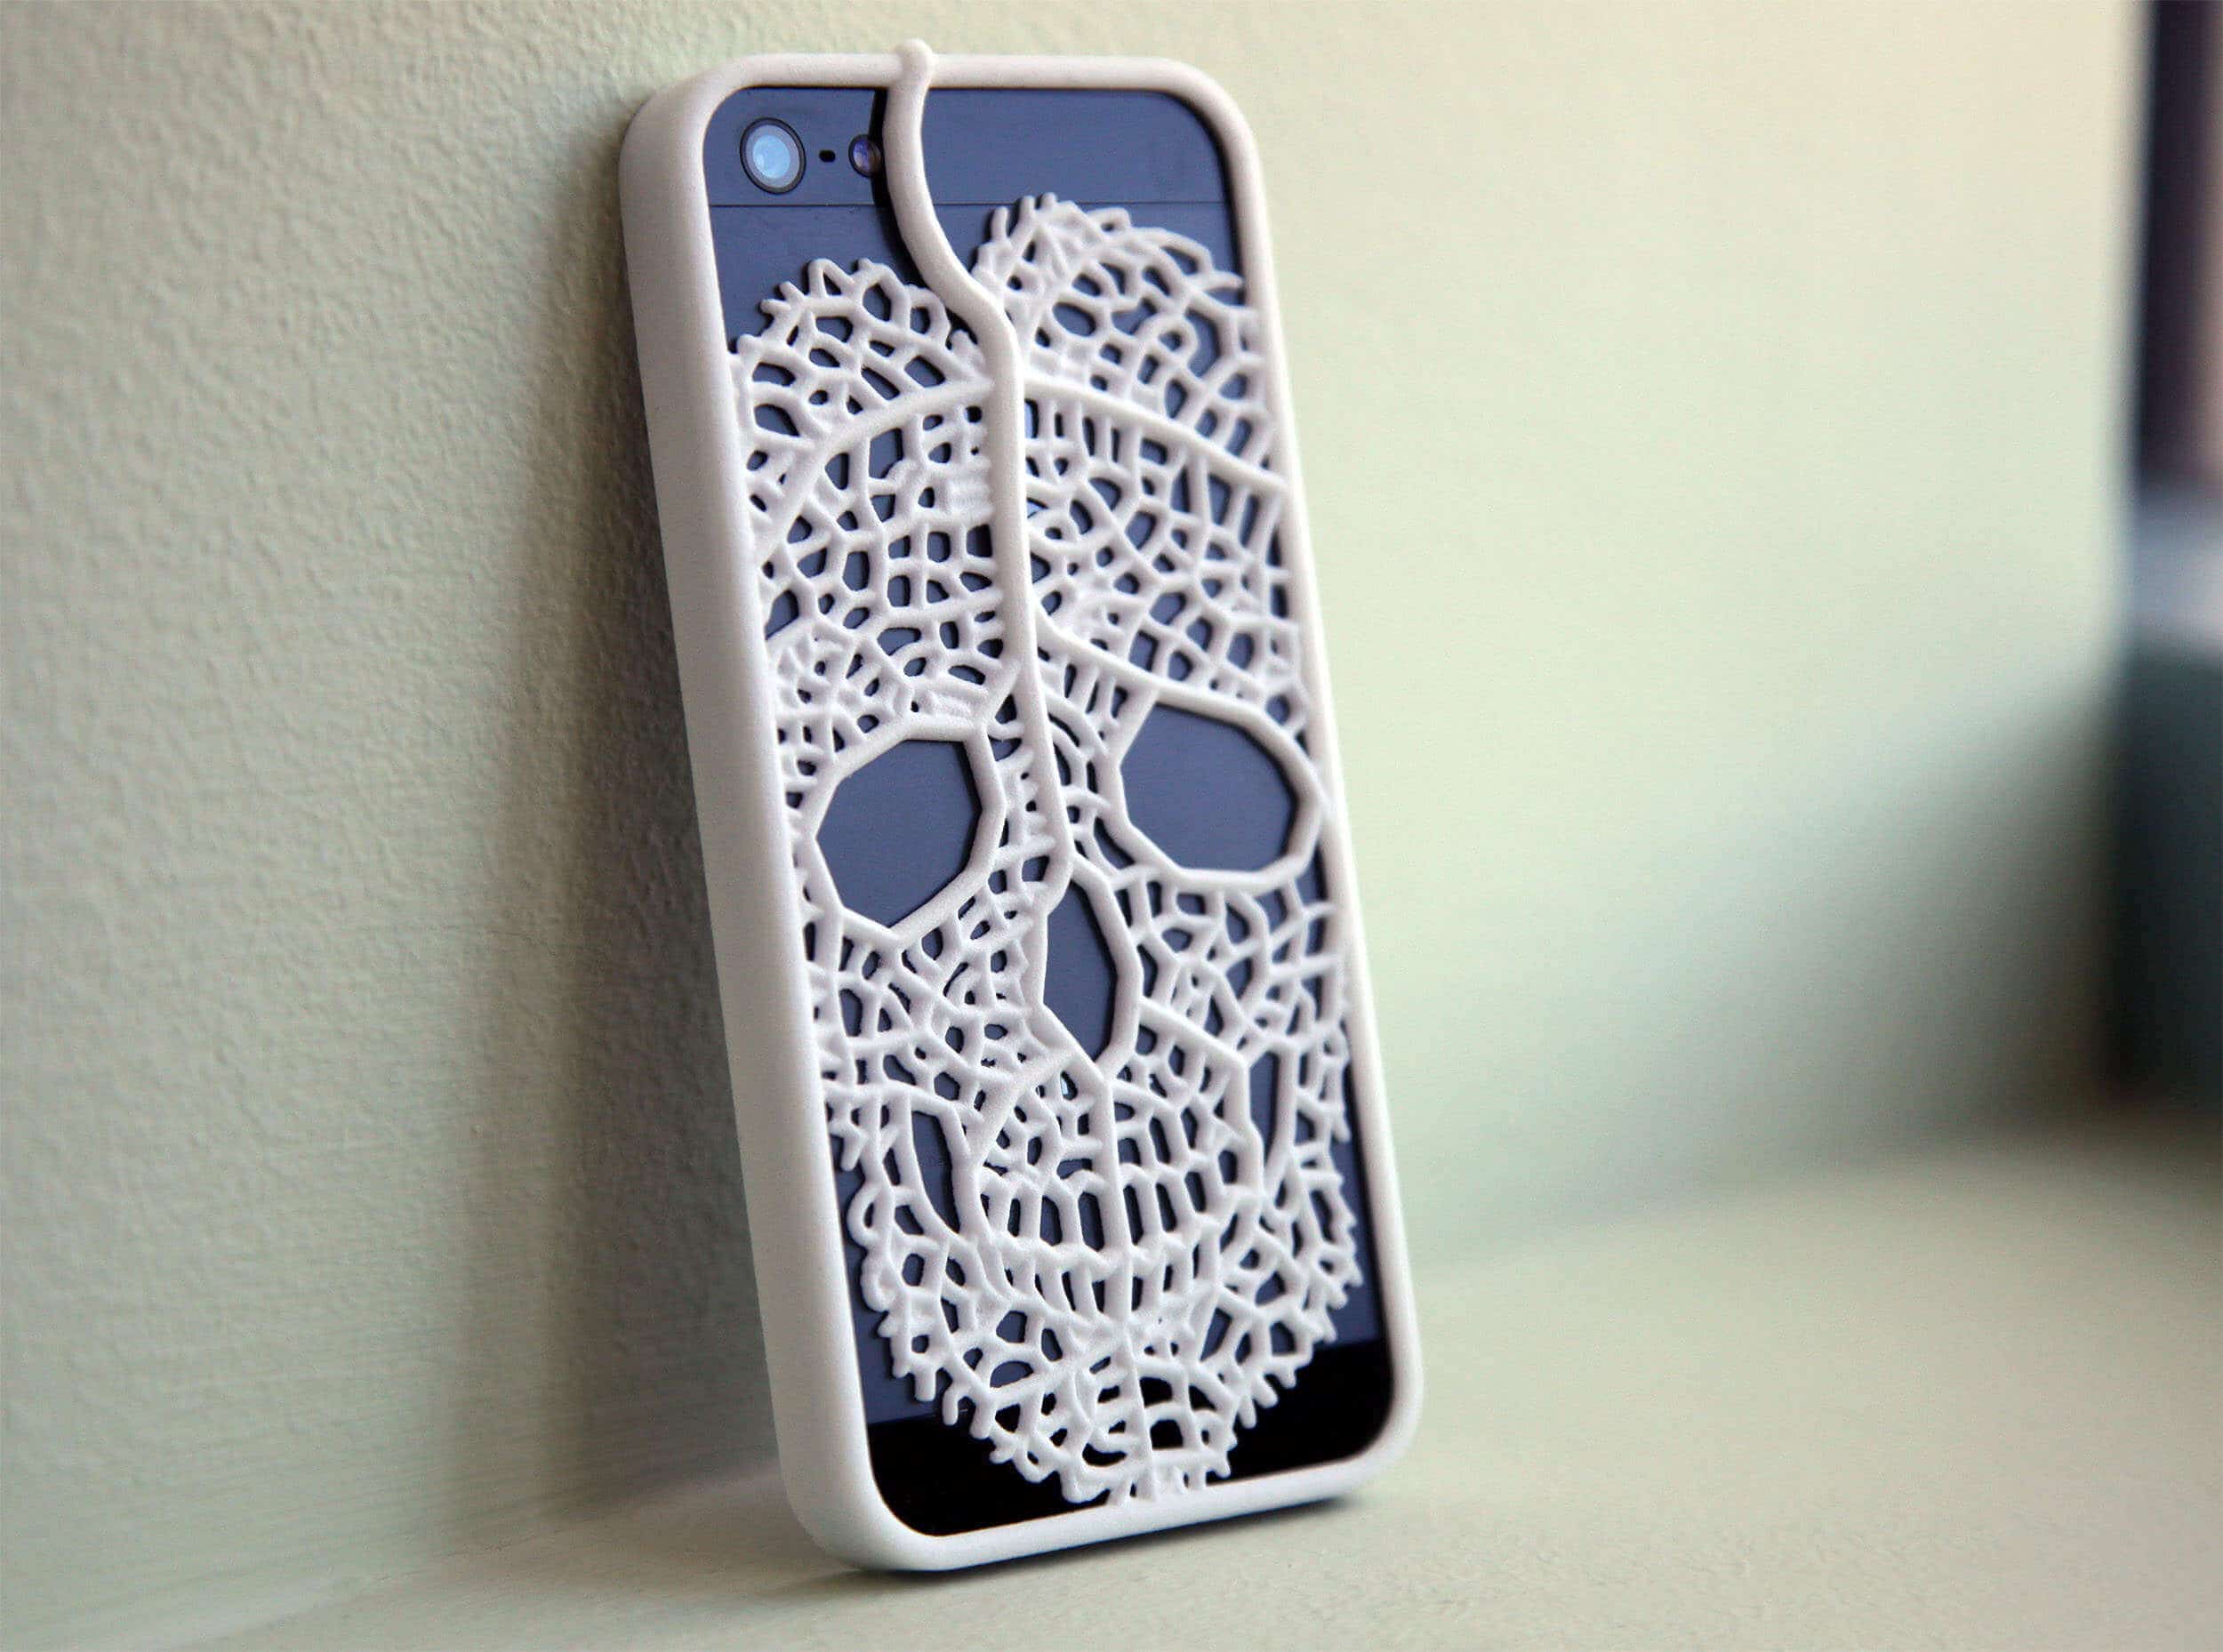 3D Printed Skull iPhone Case 4